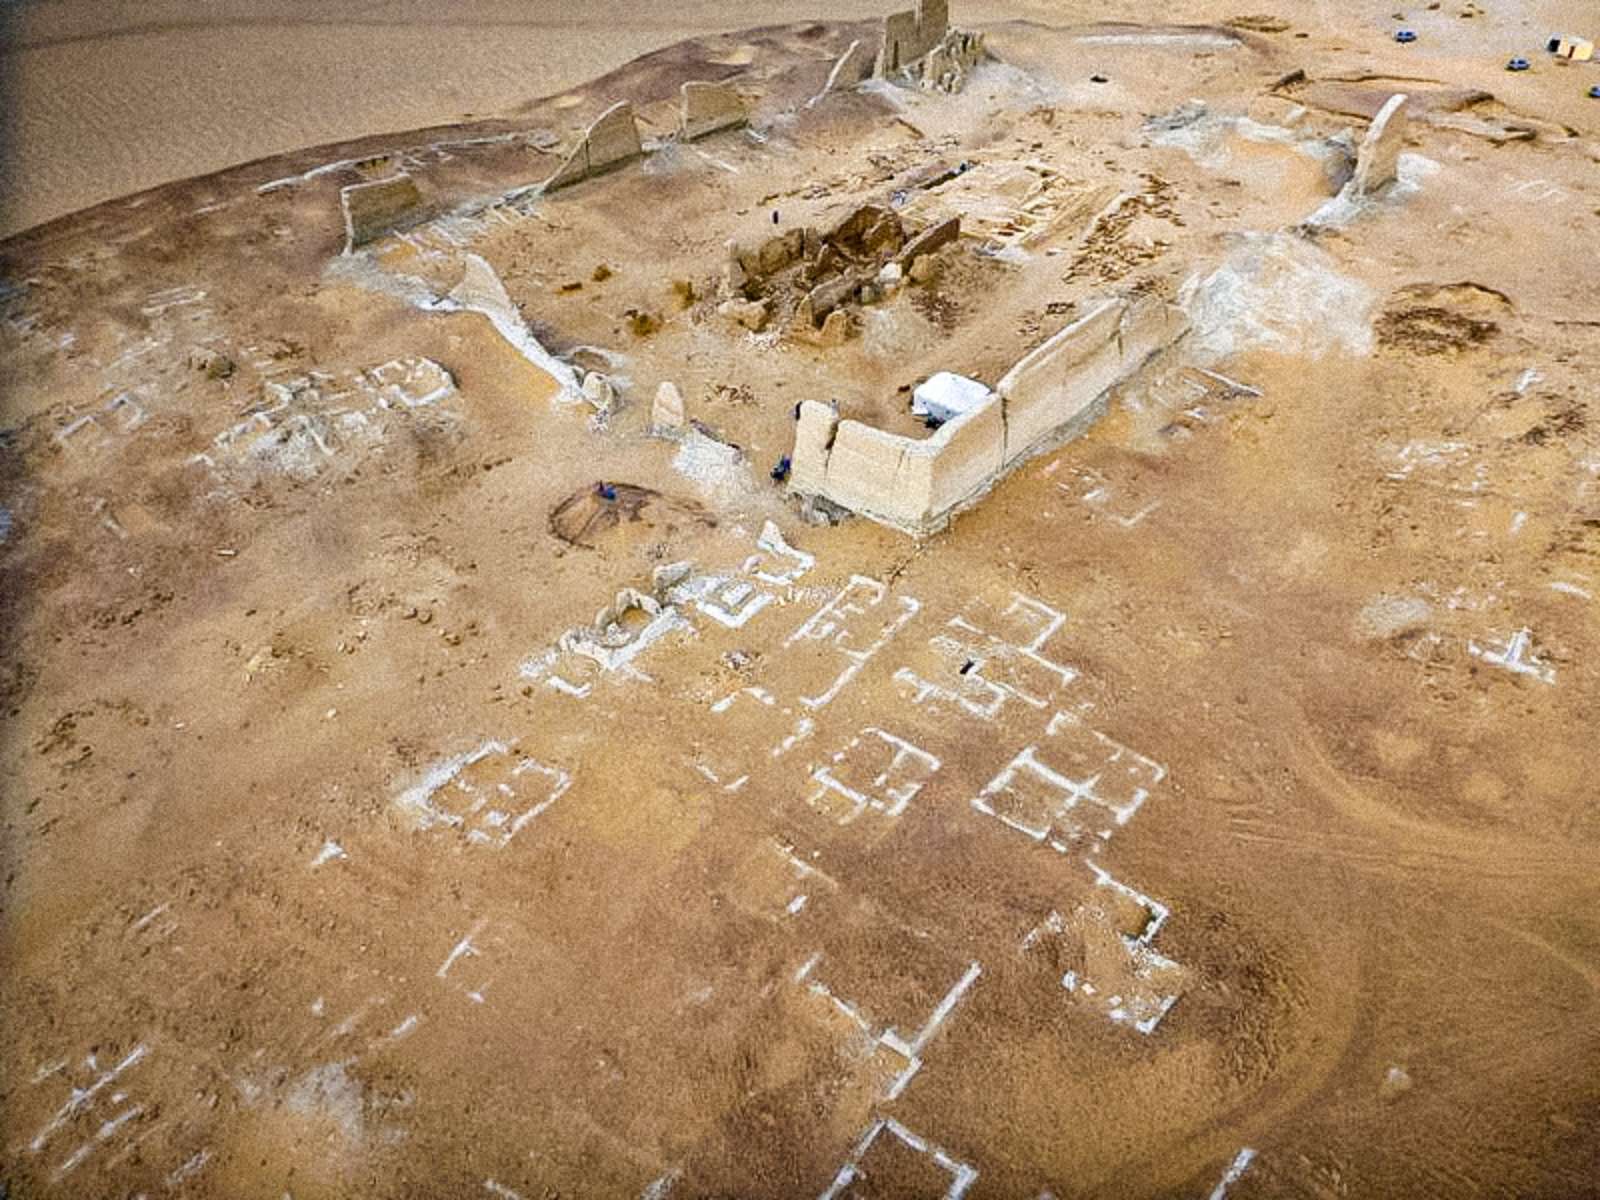 Soknopaiou Nesos: 파이윰 1 사막에 있는 신비한 고대 도시